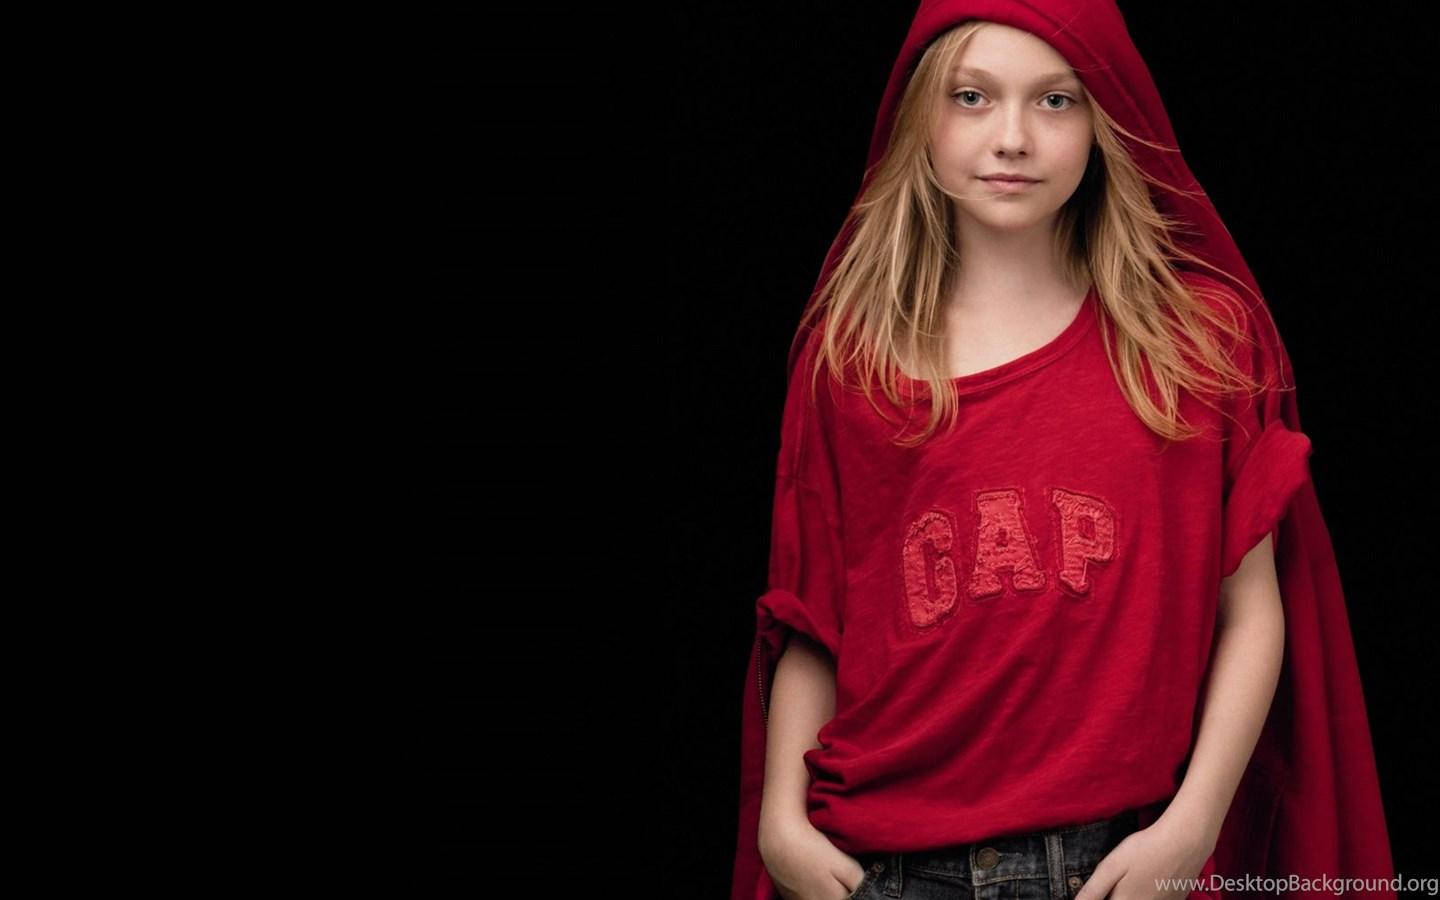 Young Dakota Fanning endorses Gap Wallpaper